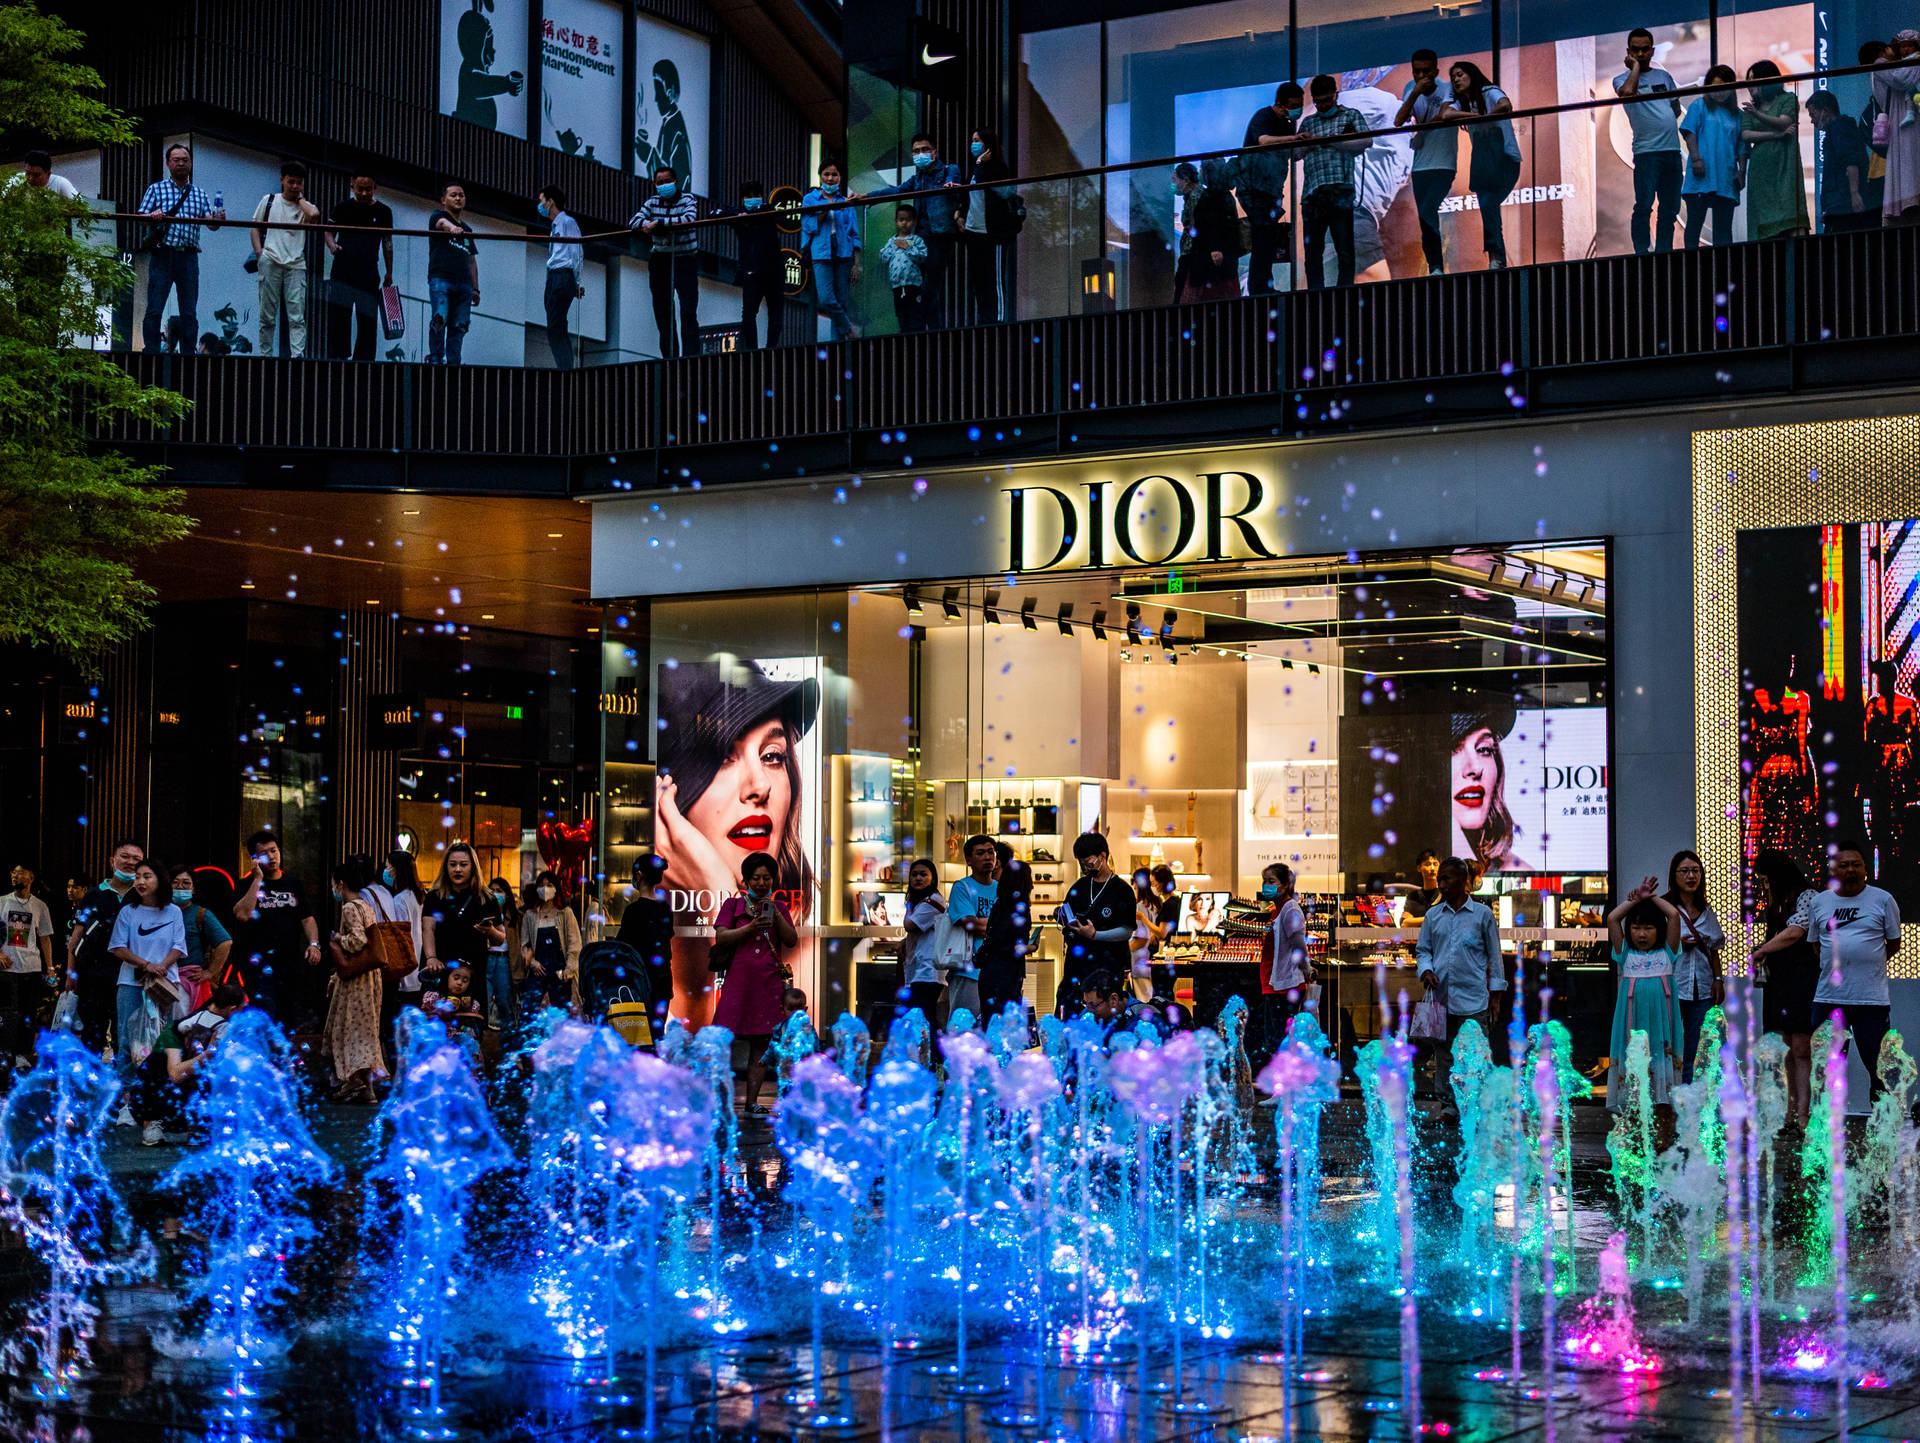 Dior Store Mall Fountain Background